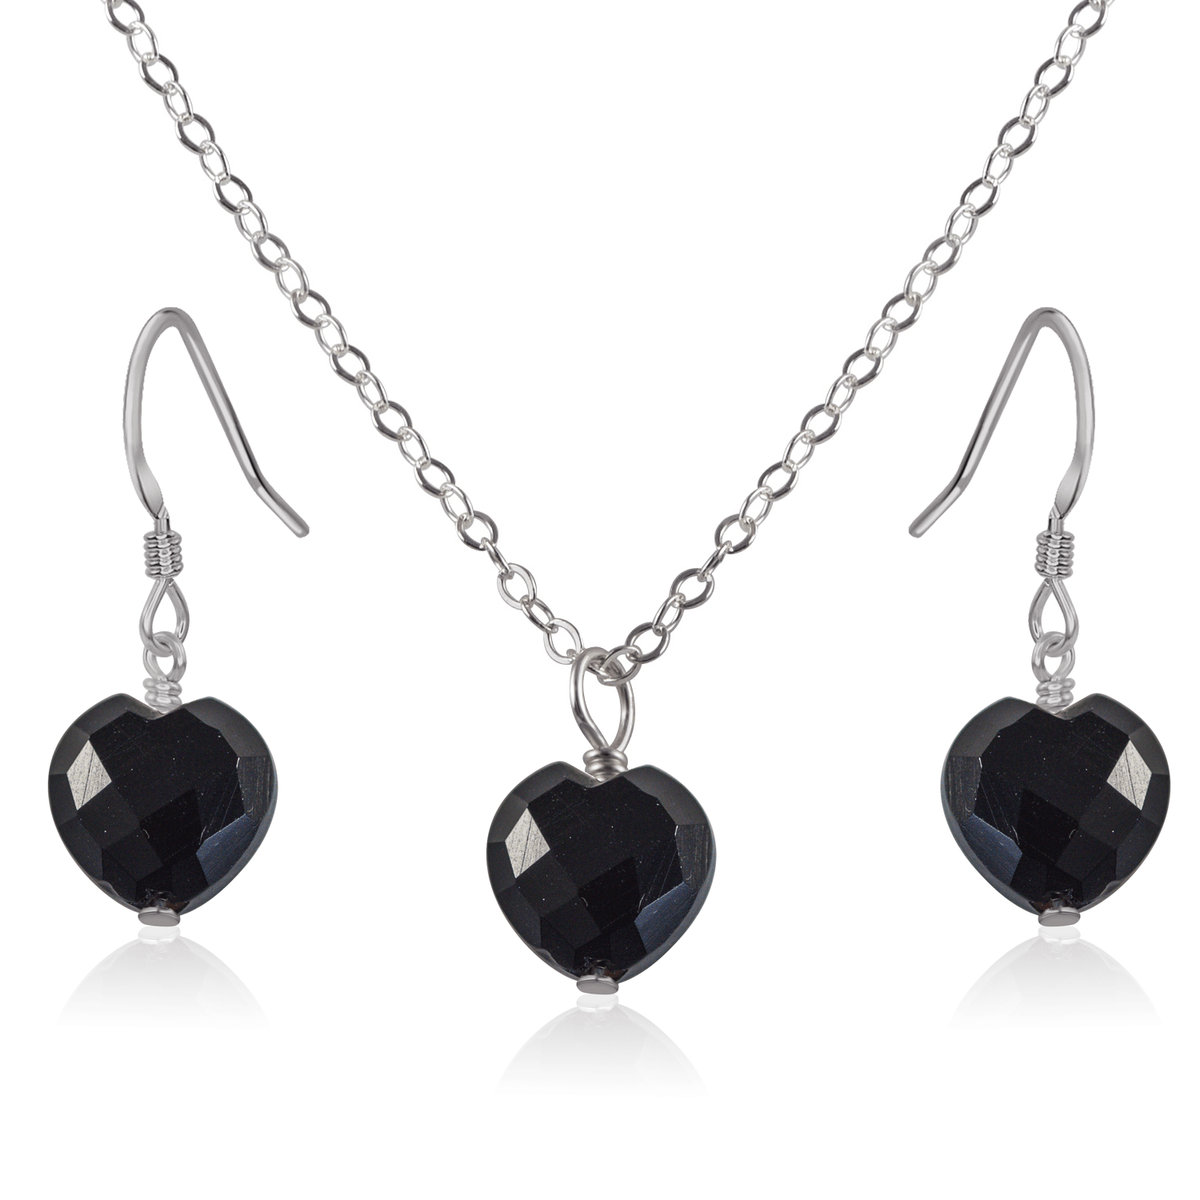 Black Onyx Crystal Heart Jewellery Set - Black Onyx Crystal Heart Jewellery Set - Stainless Steel / Cable / Necklace & Earrings - Luna Tide Handmade Crystal Jewellery